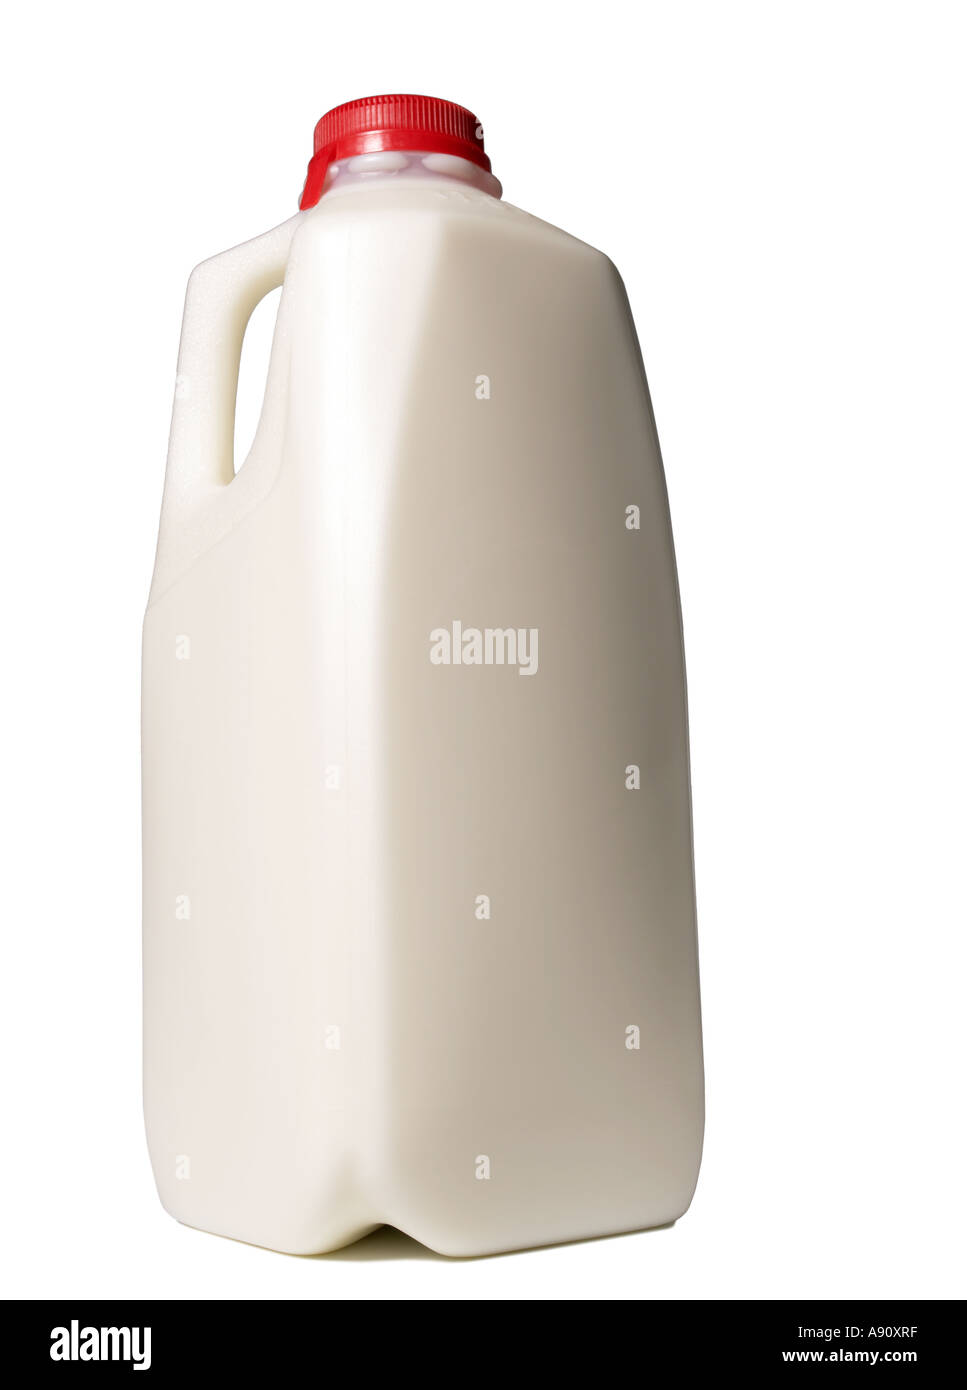 https://c8.alamy.com/comp/A90XRF/half-gallon-milk-A90XRF.jpg